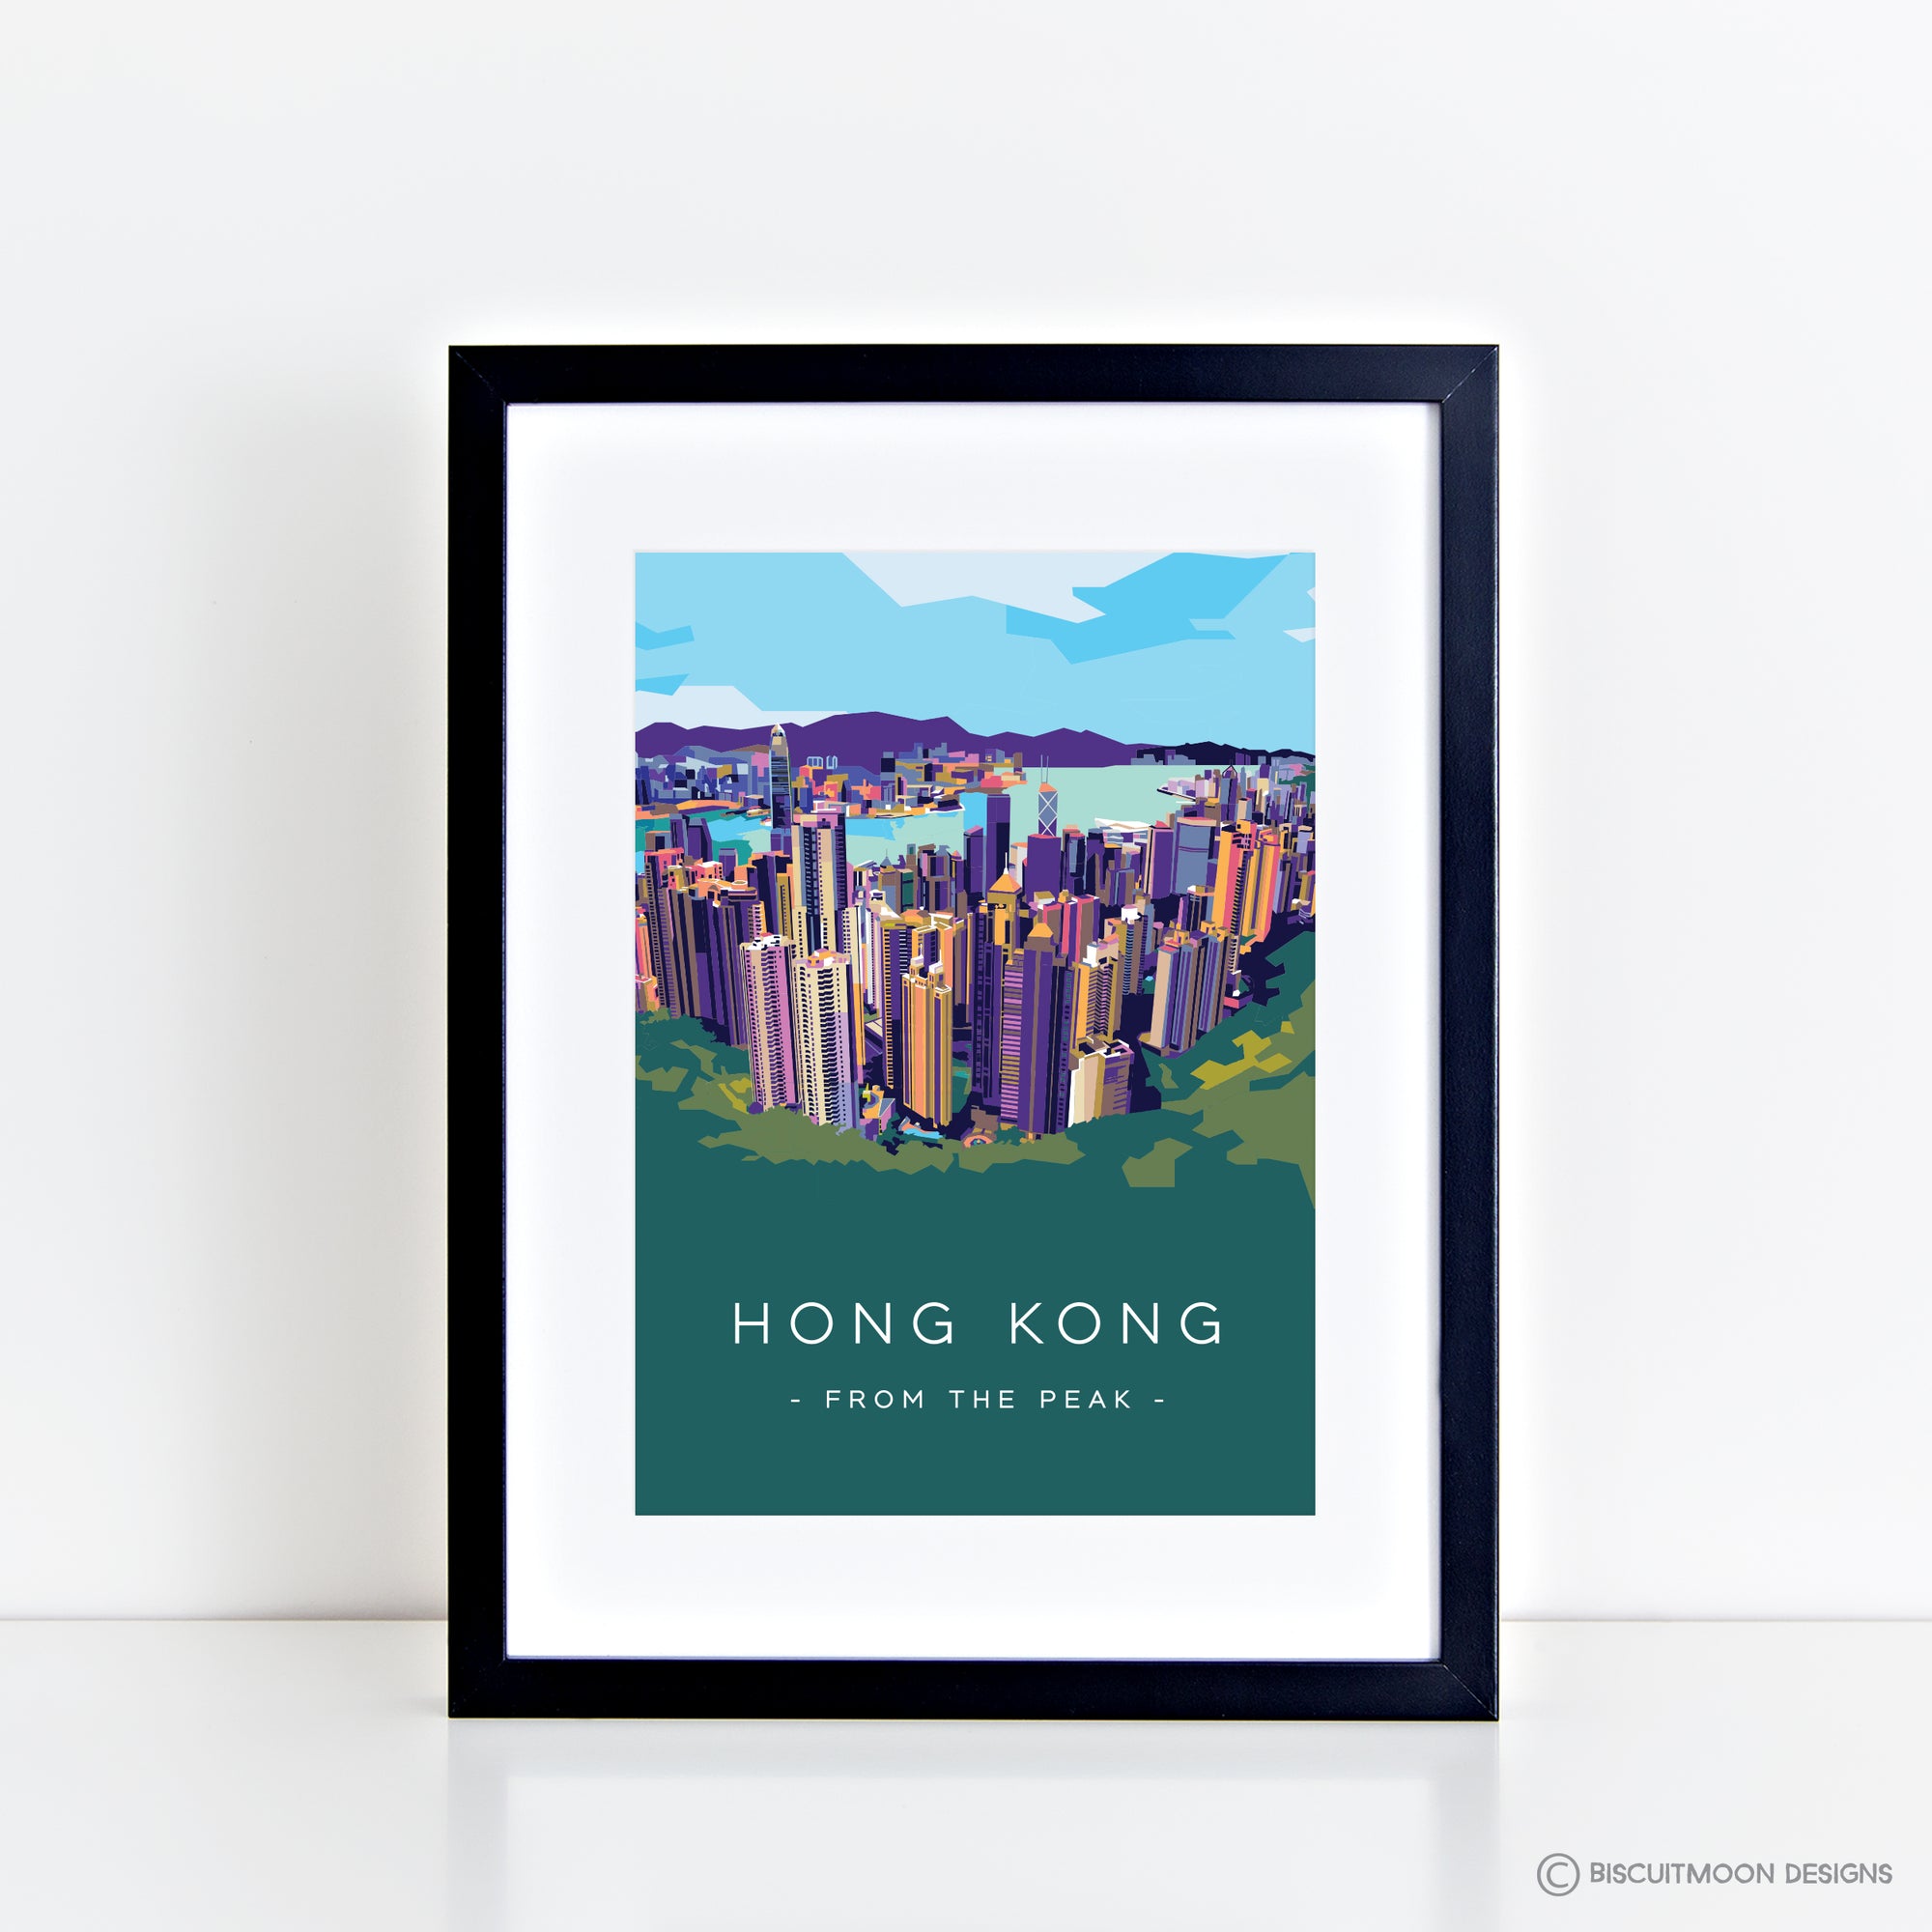 Hong Kong Travel Print - From the Peak